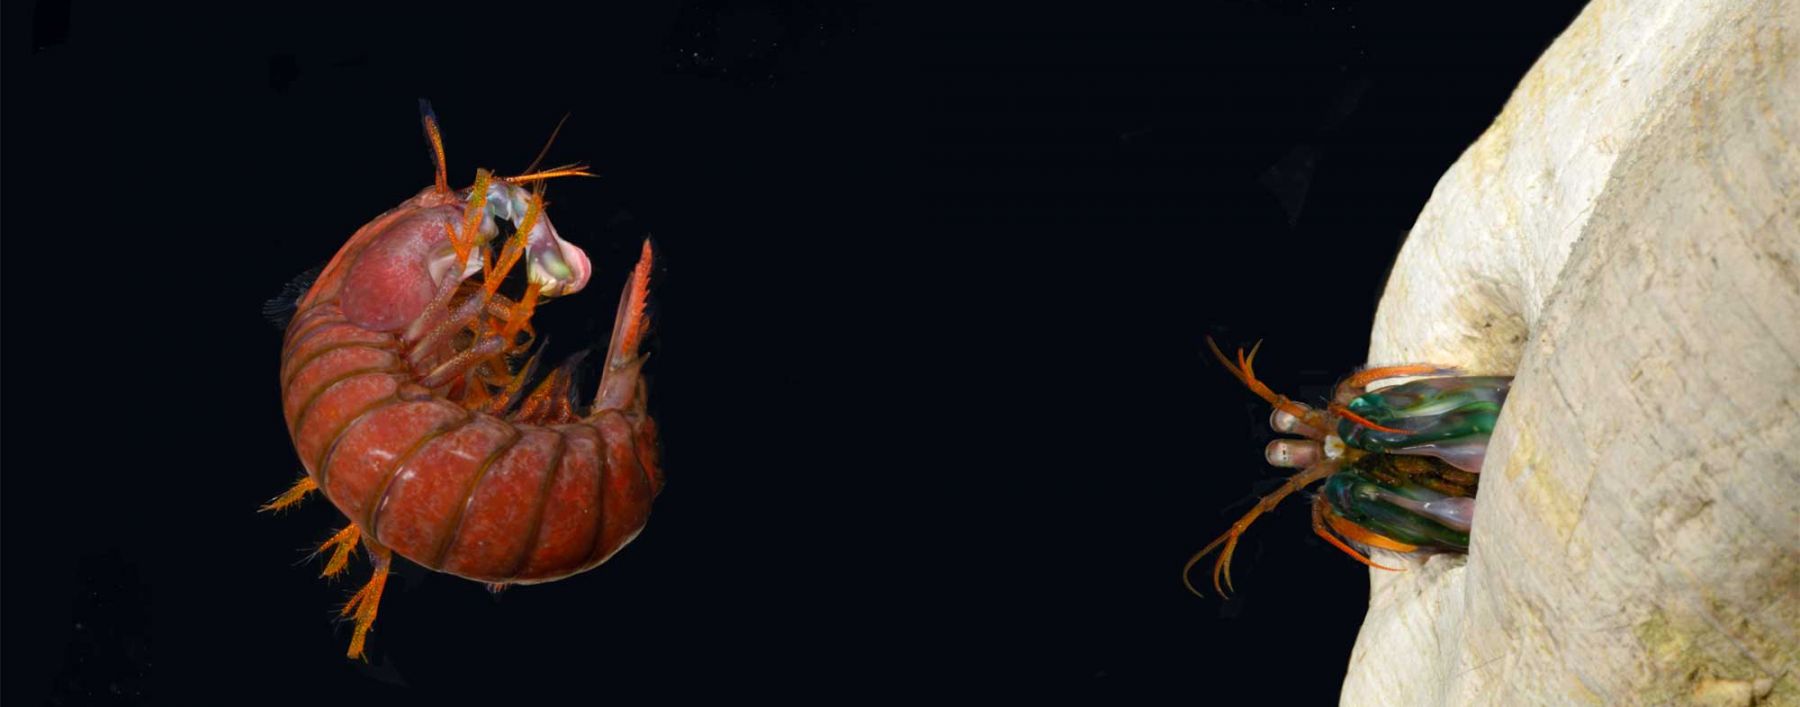 Mantis shrimp contest. Credit: Roy Caldwell